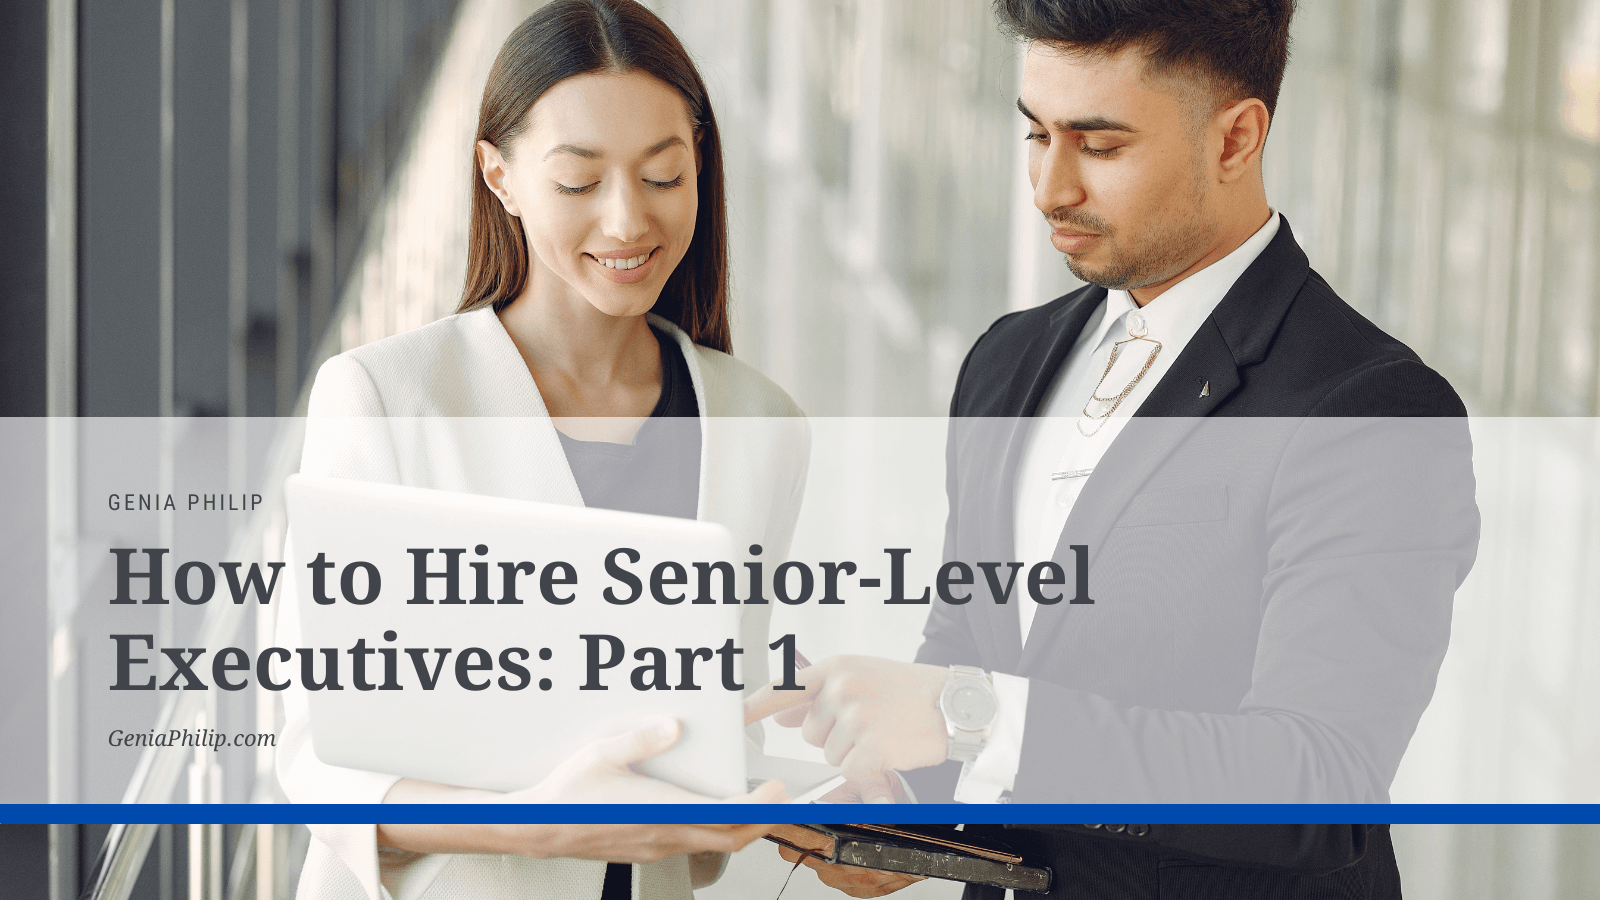 Genia Philip How to Hire Senior-Level Executives: Part 1